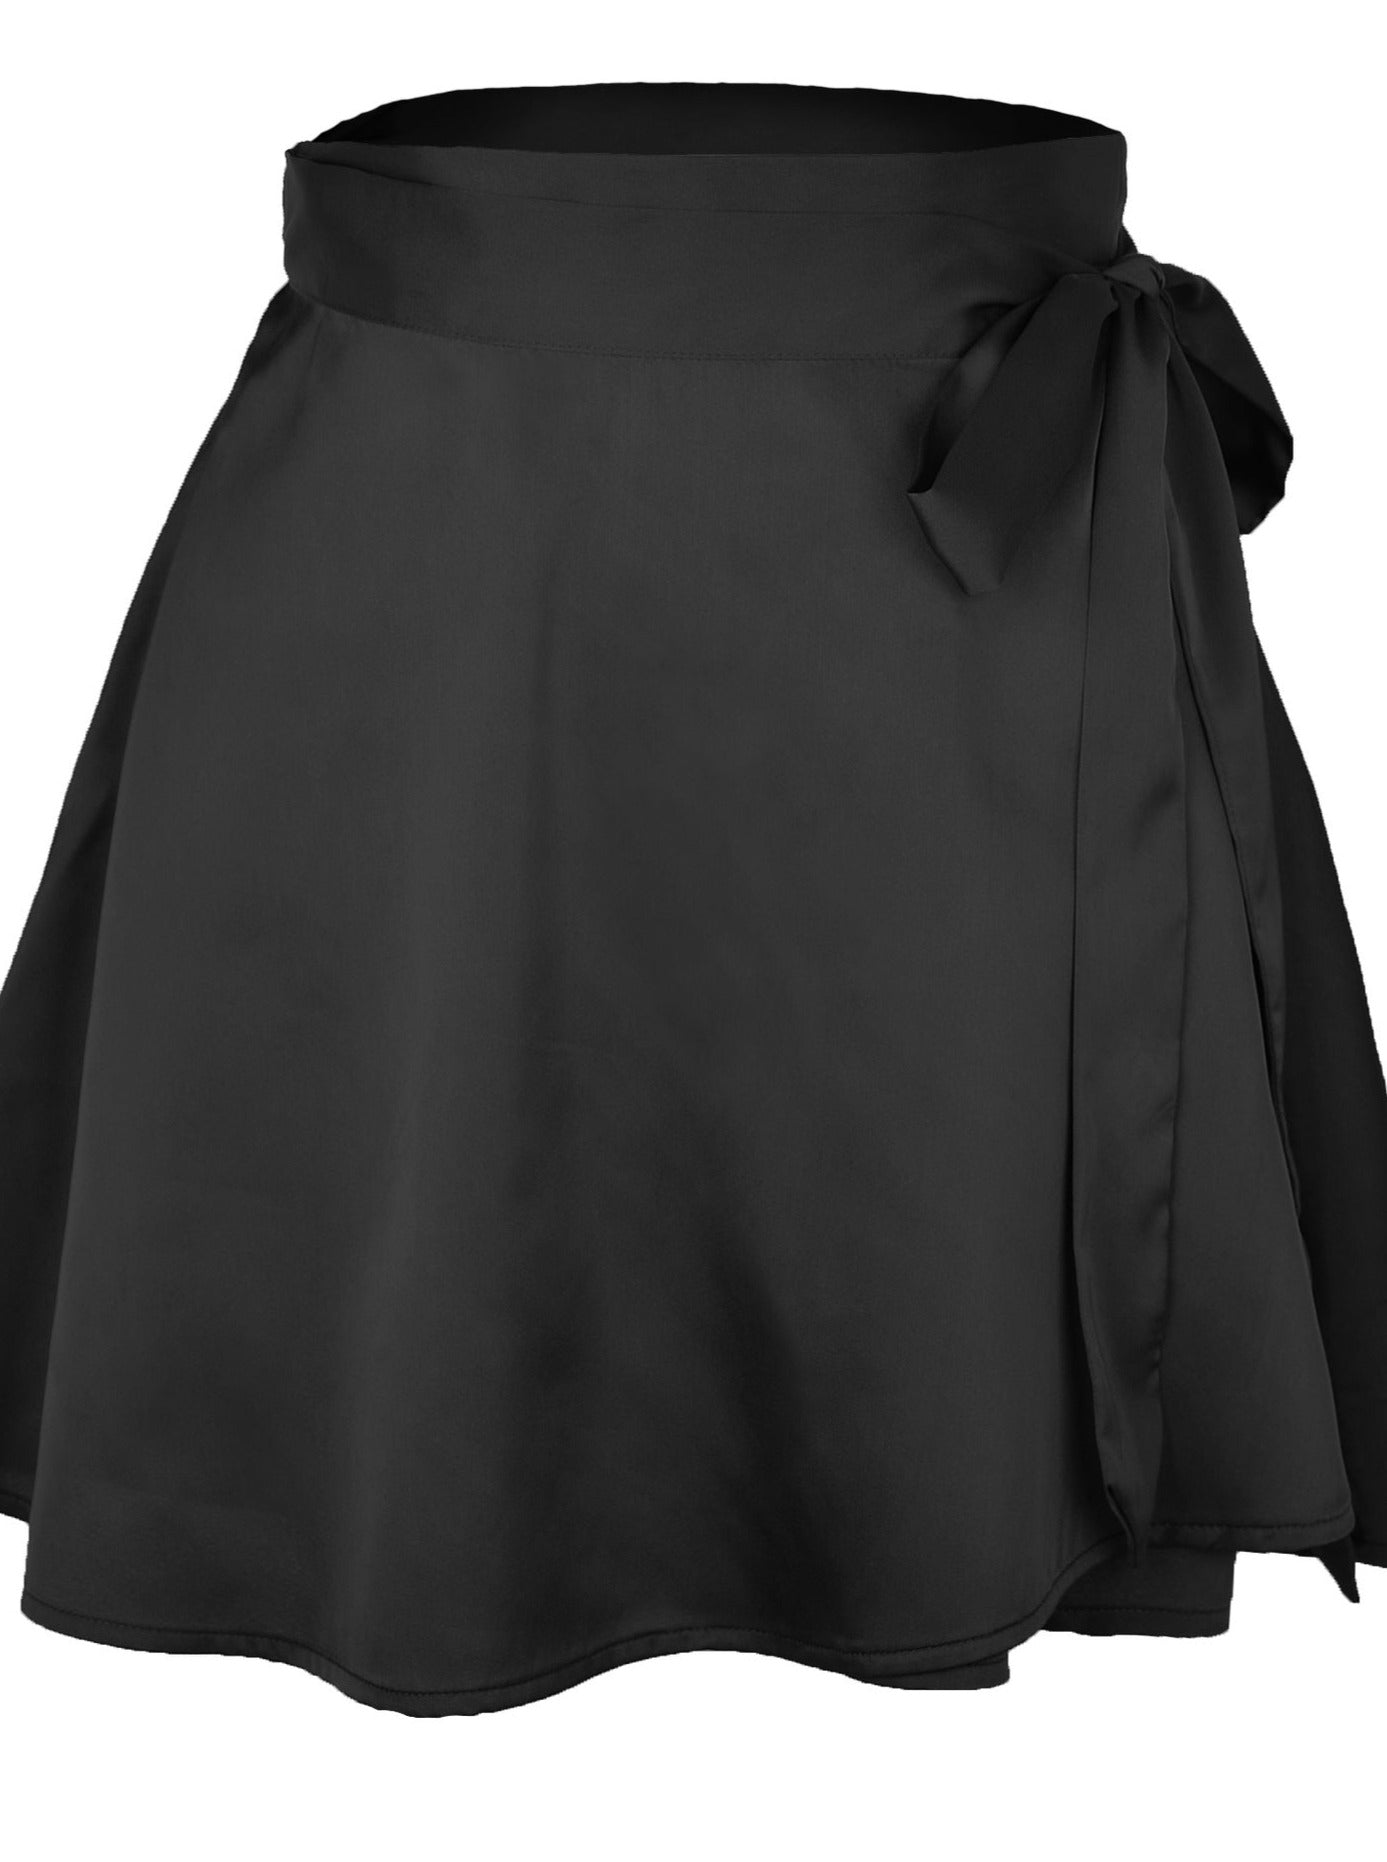 Black One Piece Lace-Up High Waist Wrap Skirt